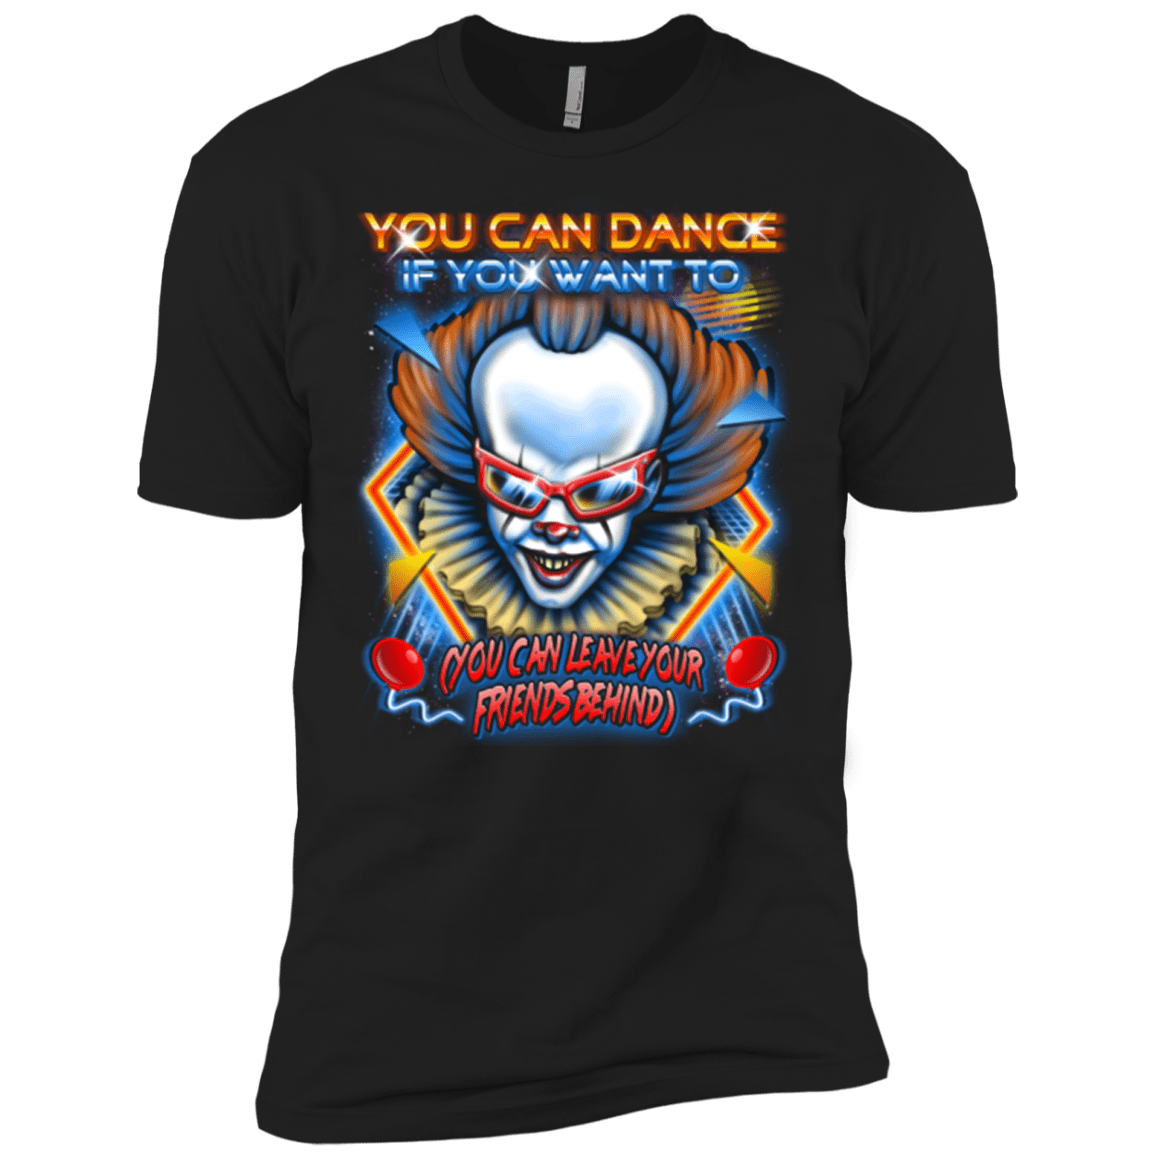 You can Dance Men's Premium T-Shirt